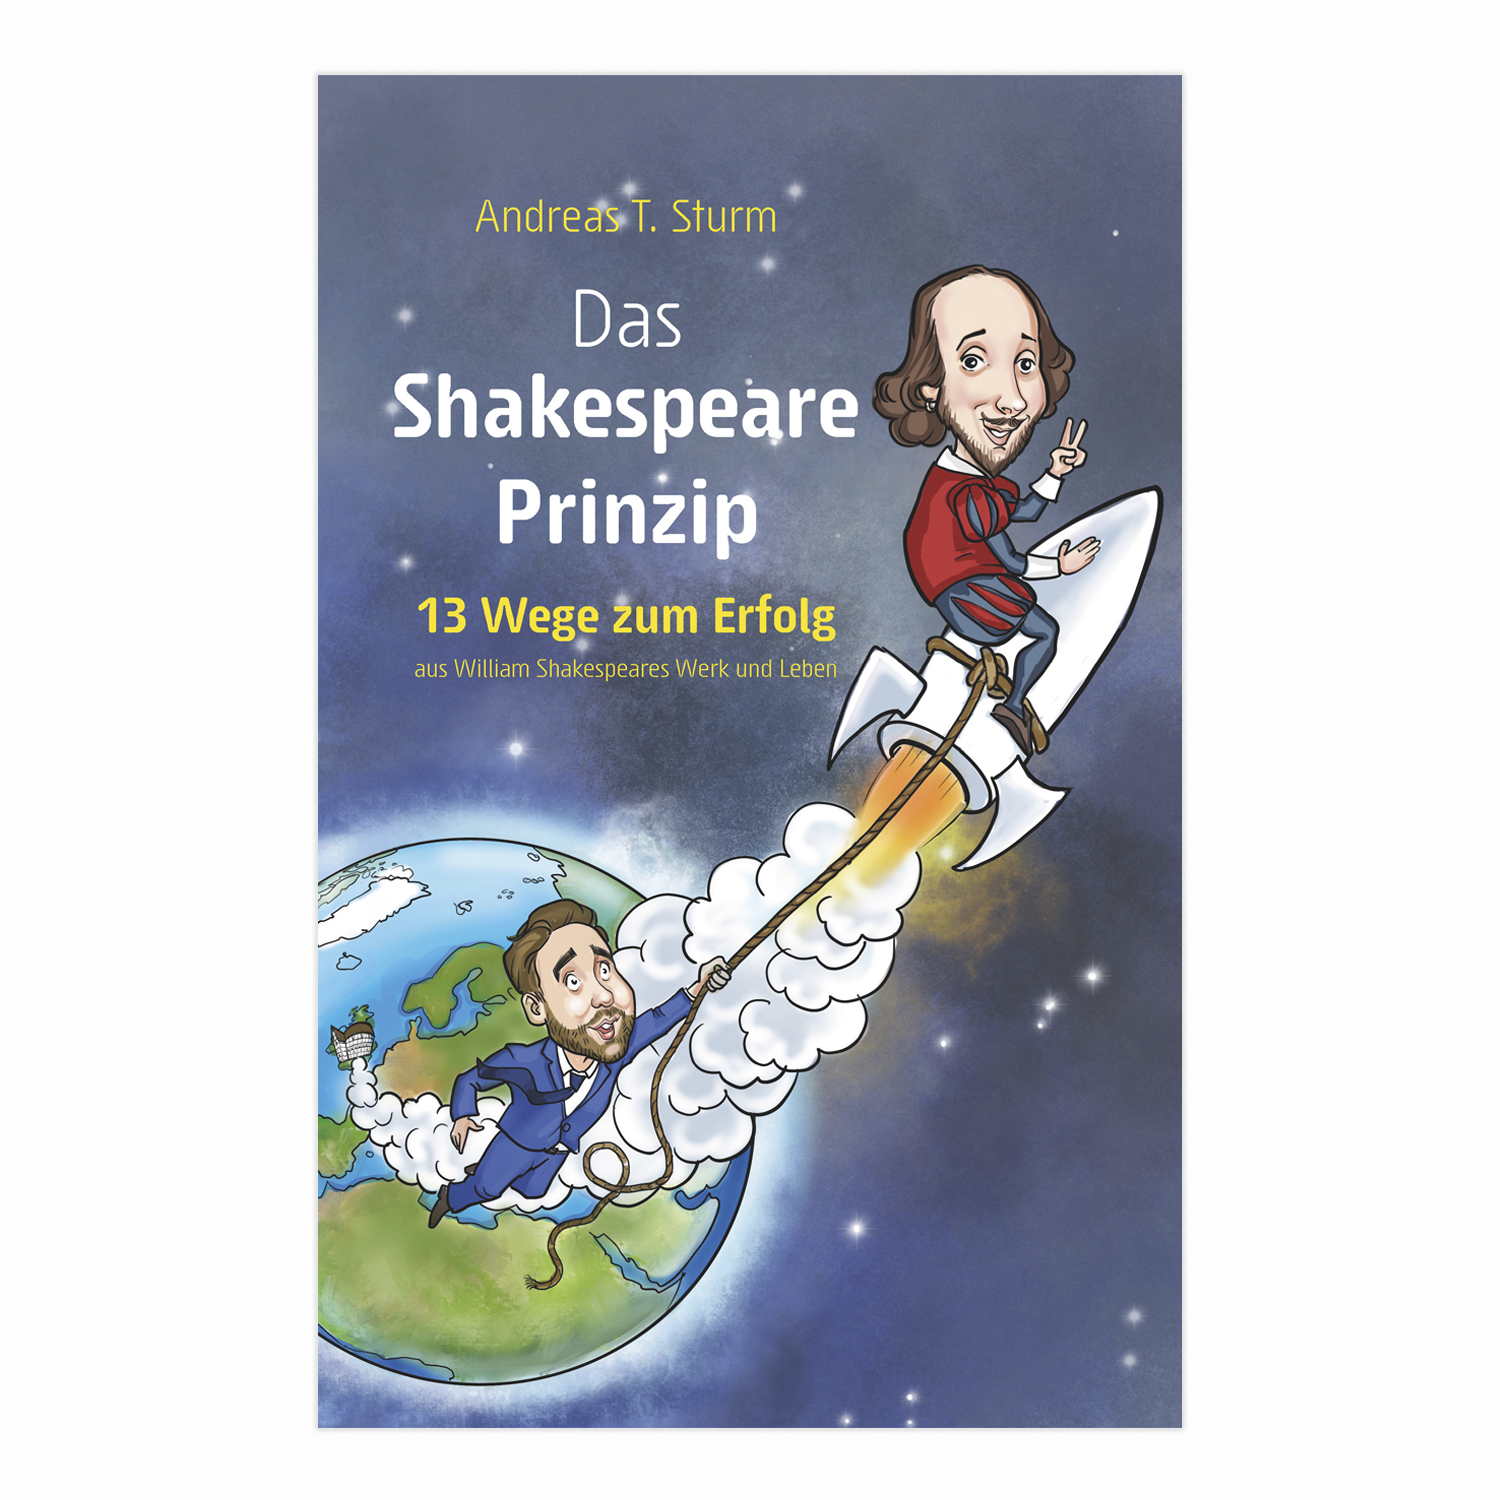 Das Shakespeare-Prinzip (Andreas T. Sturm)